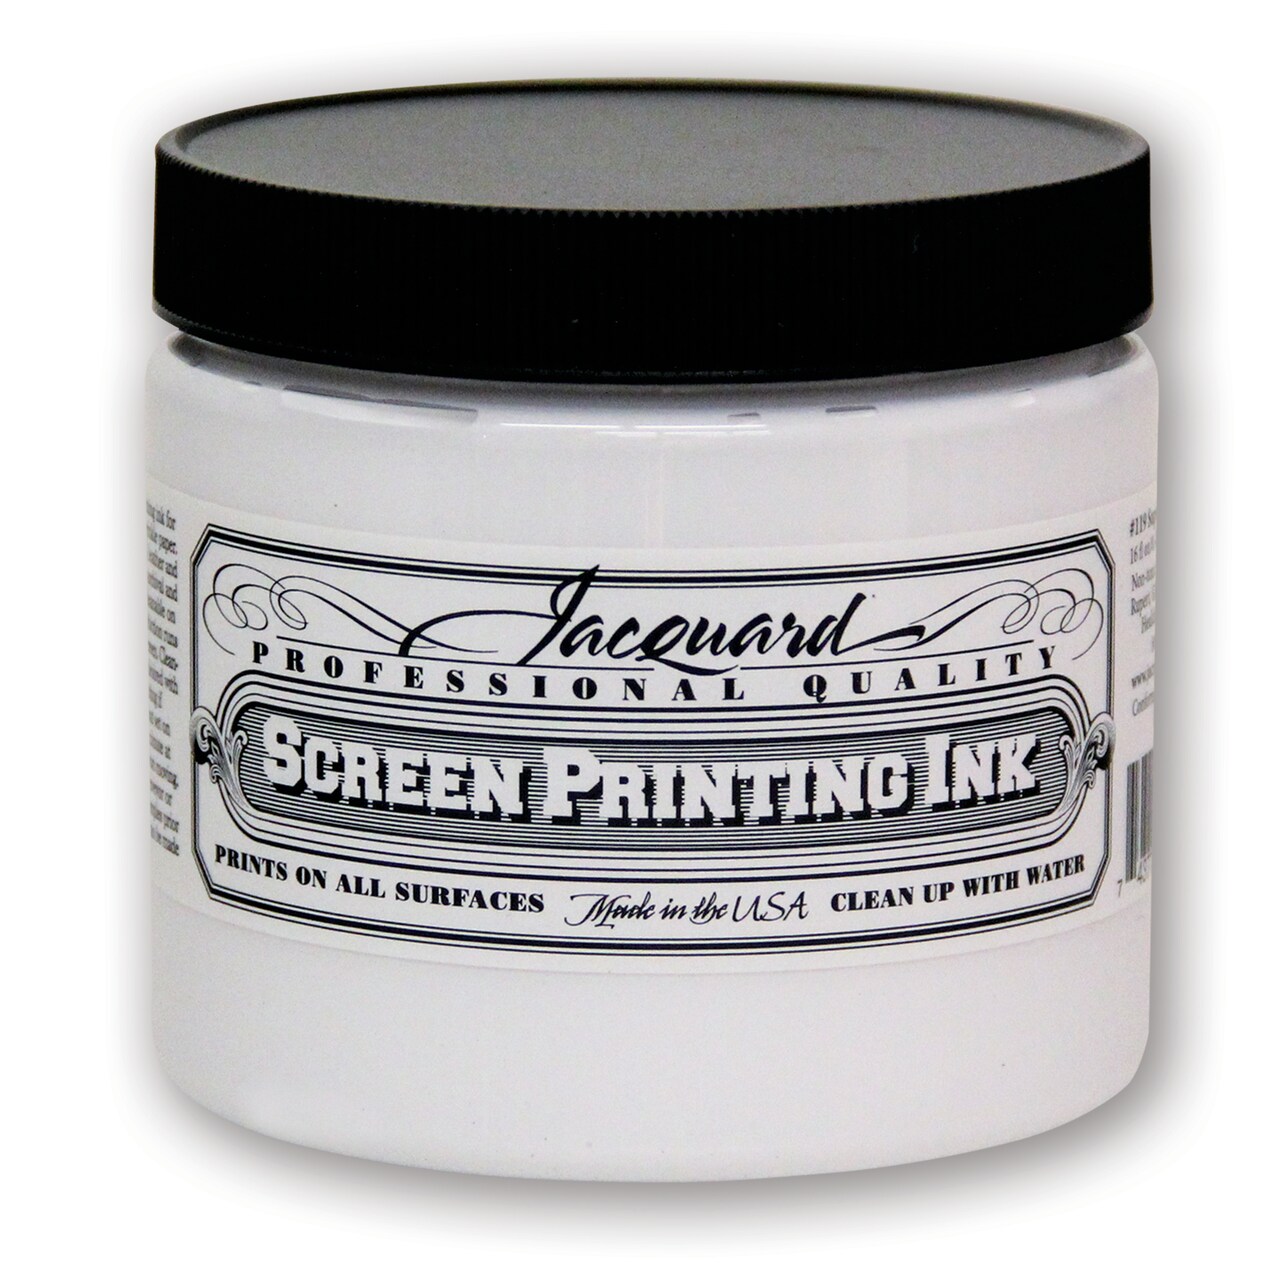 Jacquard Professional Screen Printing Ink, 16 oz., Super Opaque White